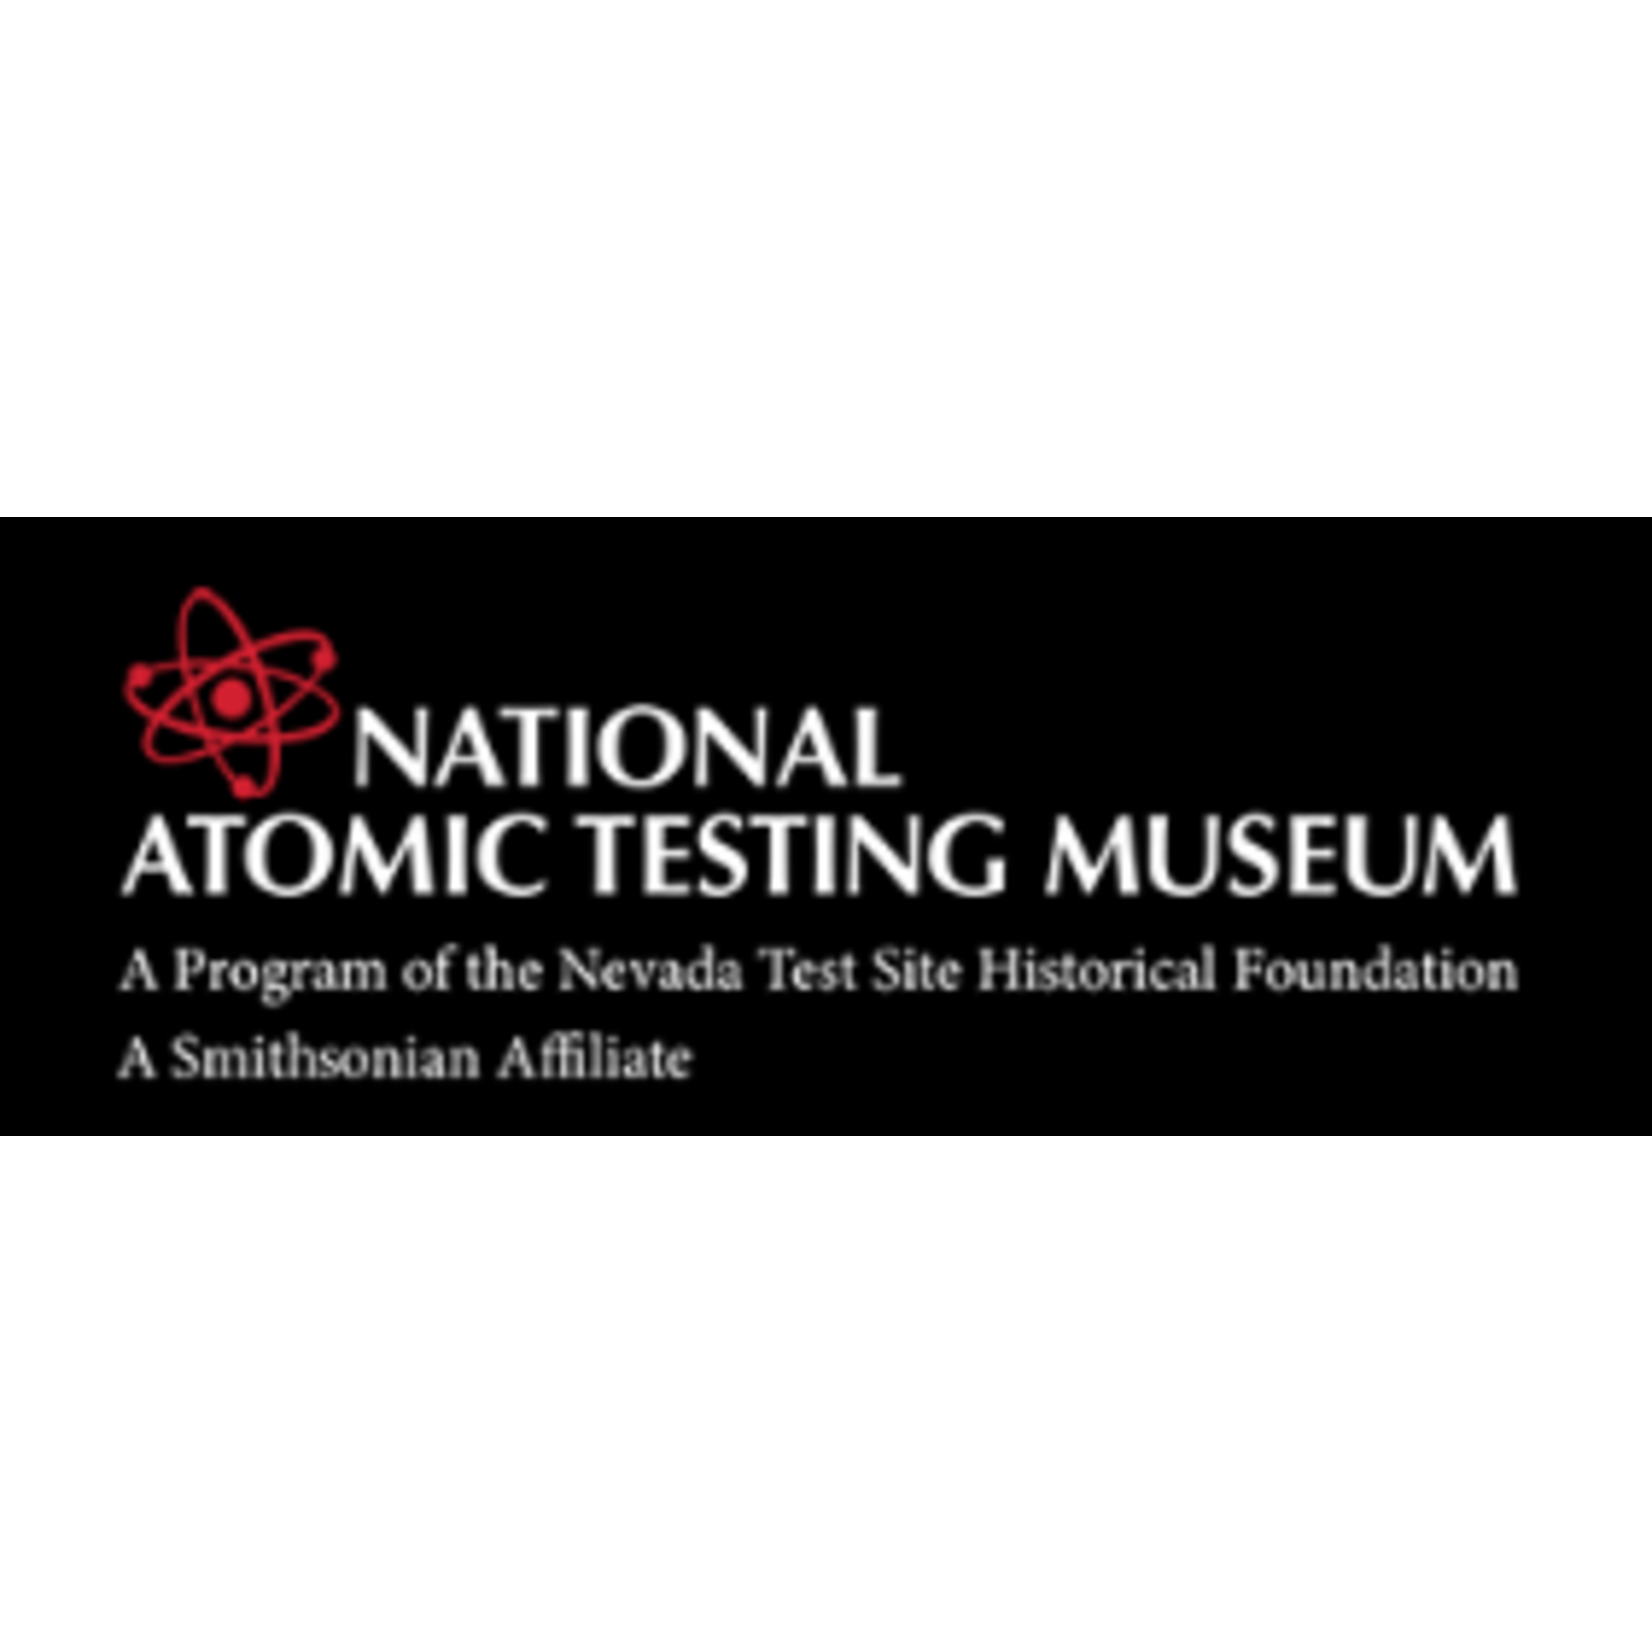 National Atomic Testing Museum National Atomic Testing Museum $36 - Pair of tickets